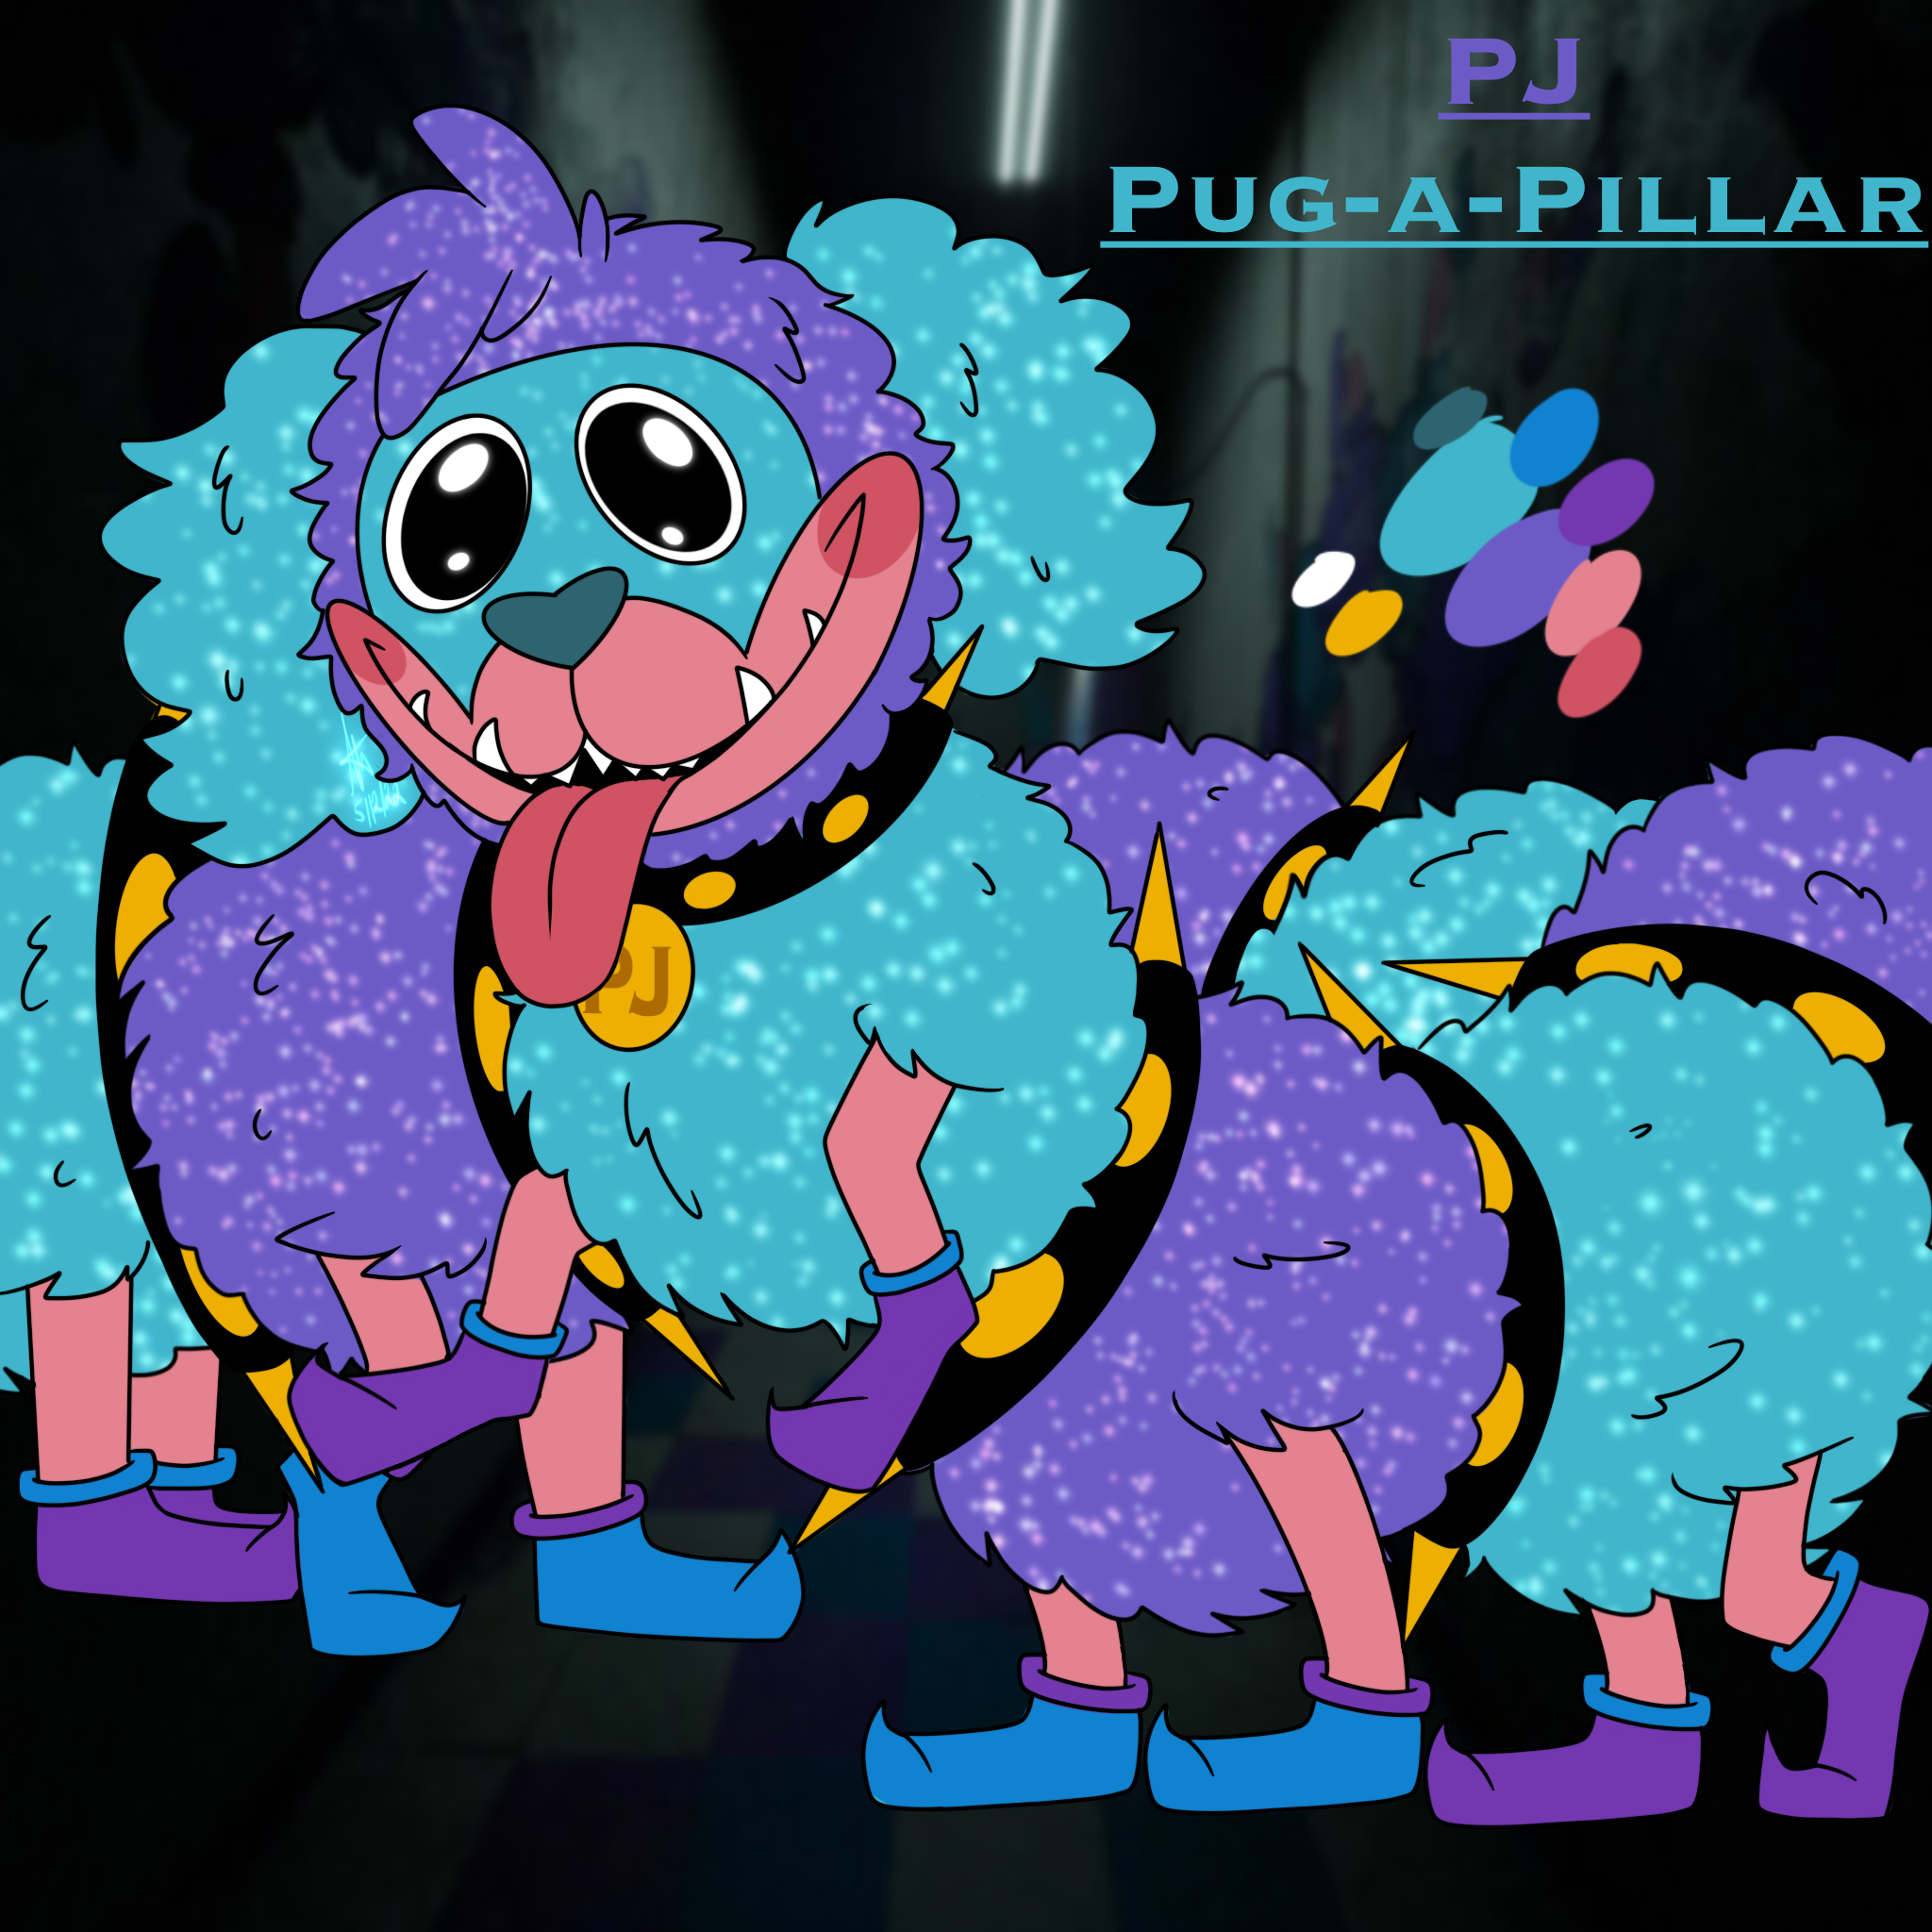 PJ Pug-a-Pillar Animation